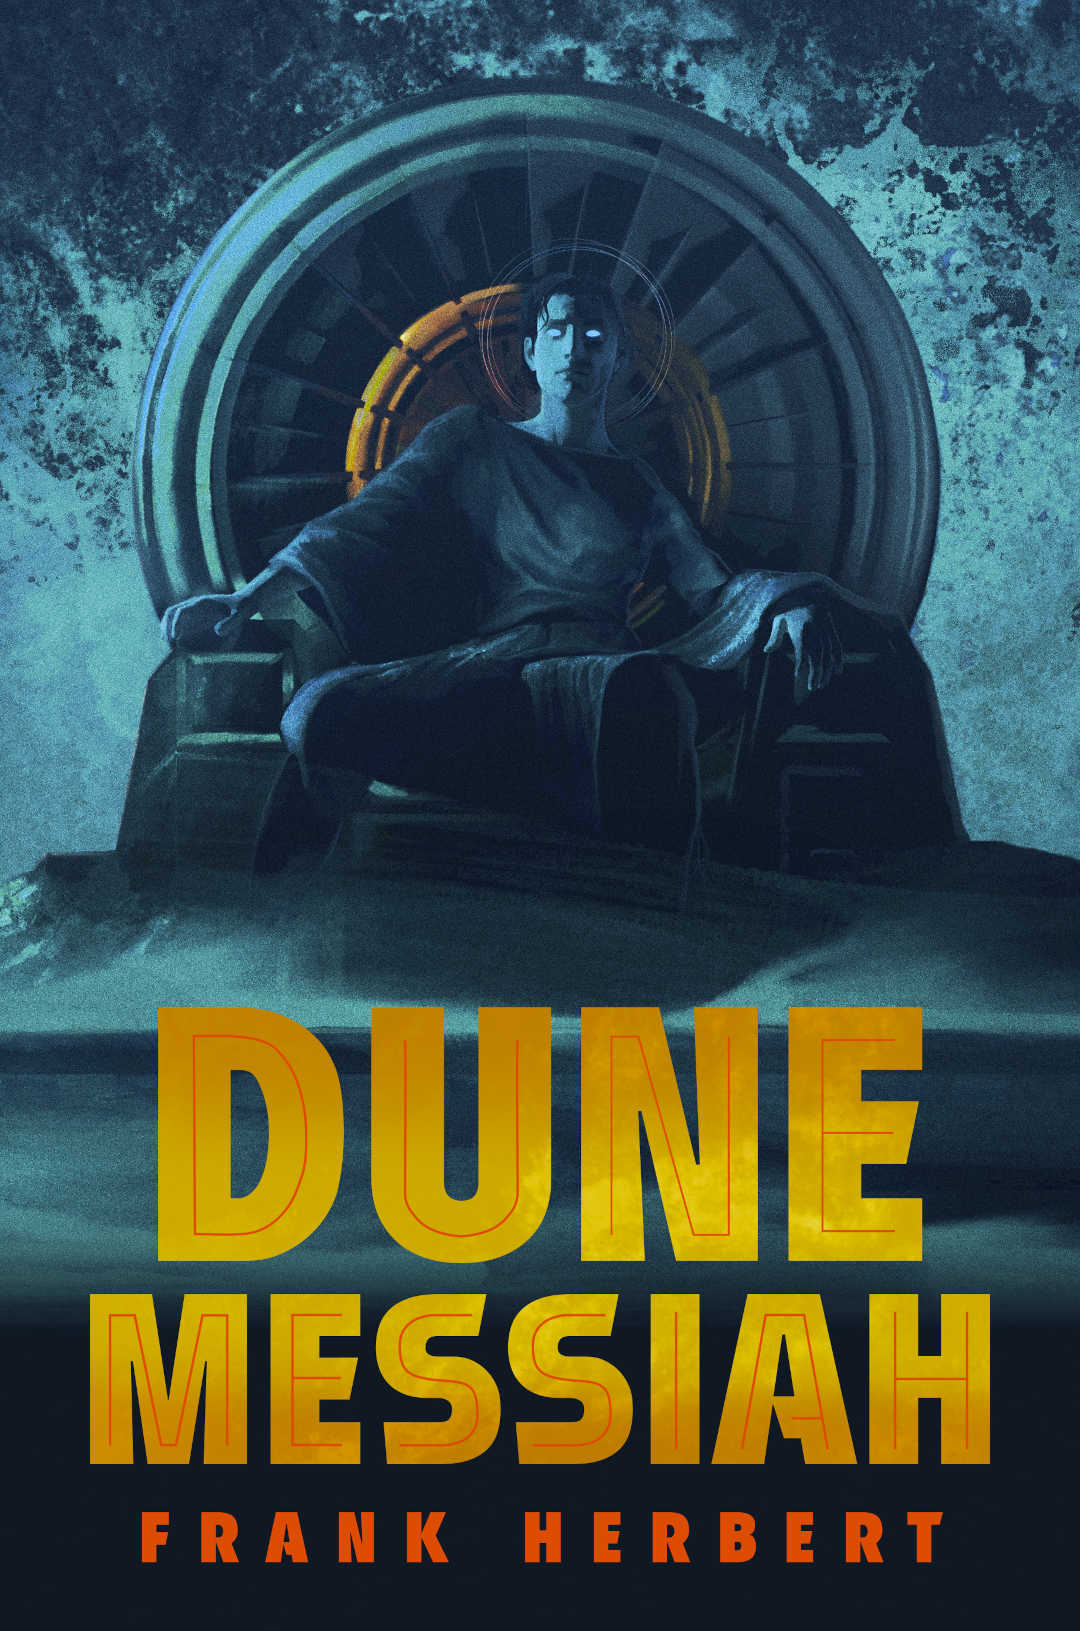 Cover of 'Dune Messiah' book, written by Frank Herbert. Deluxe edition artwork by Matt Griffin.